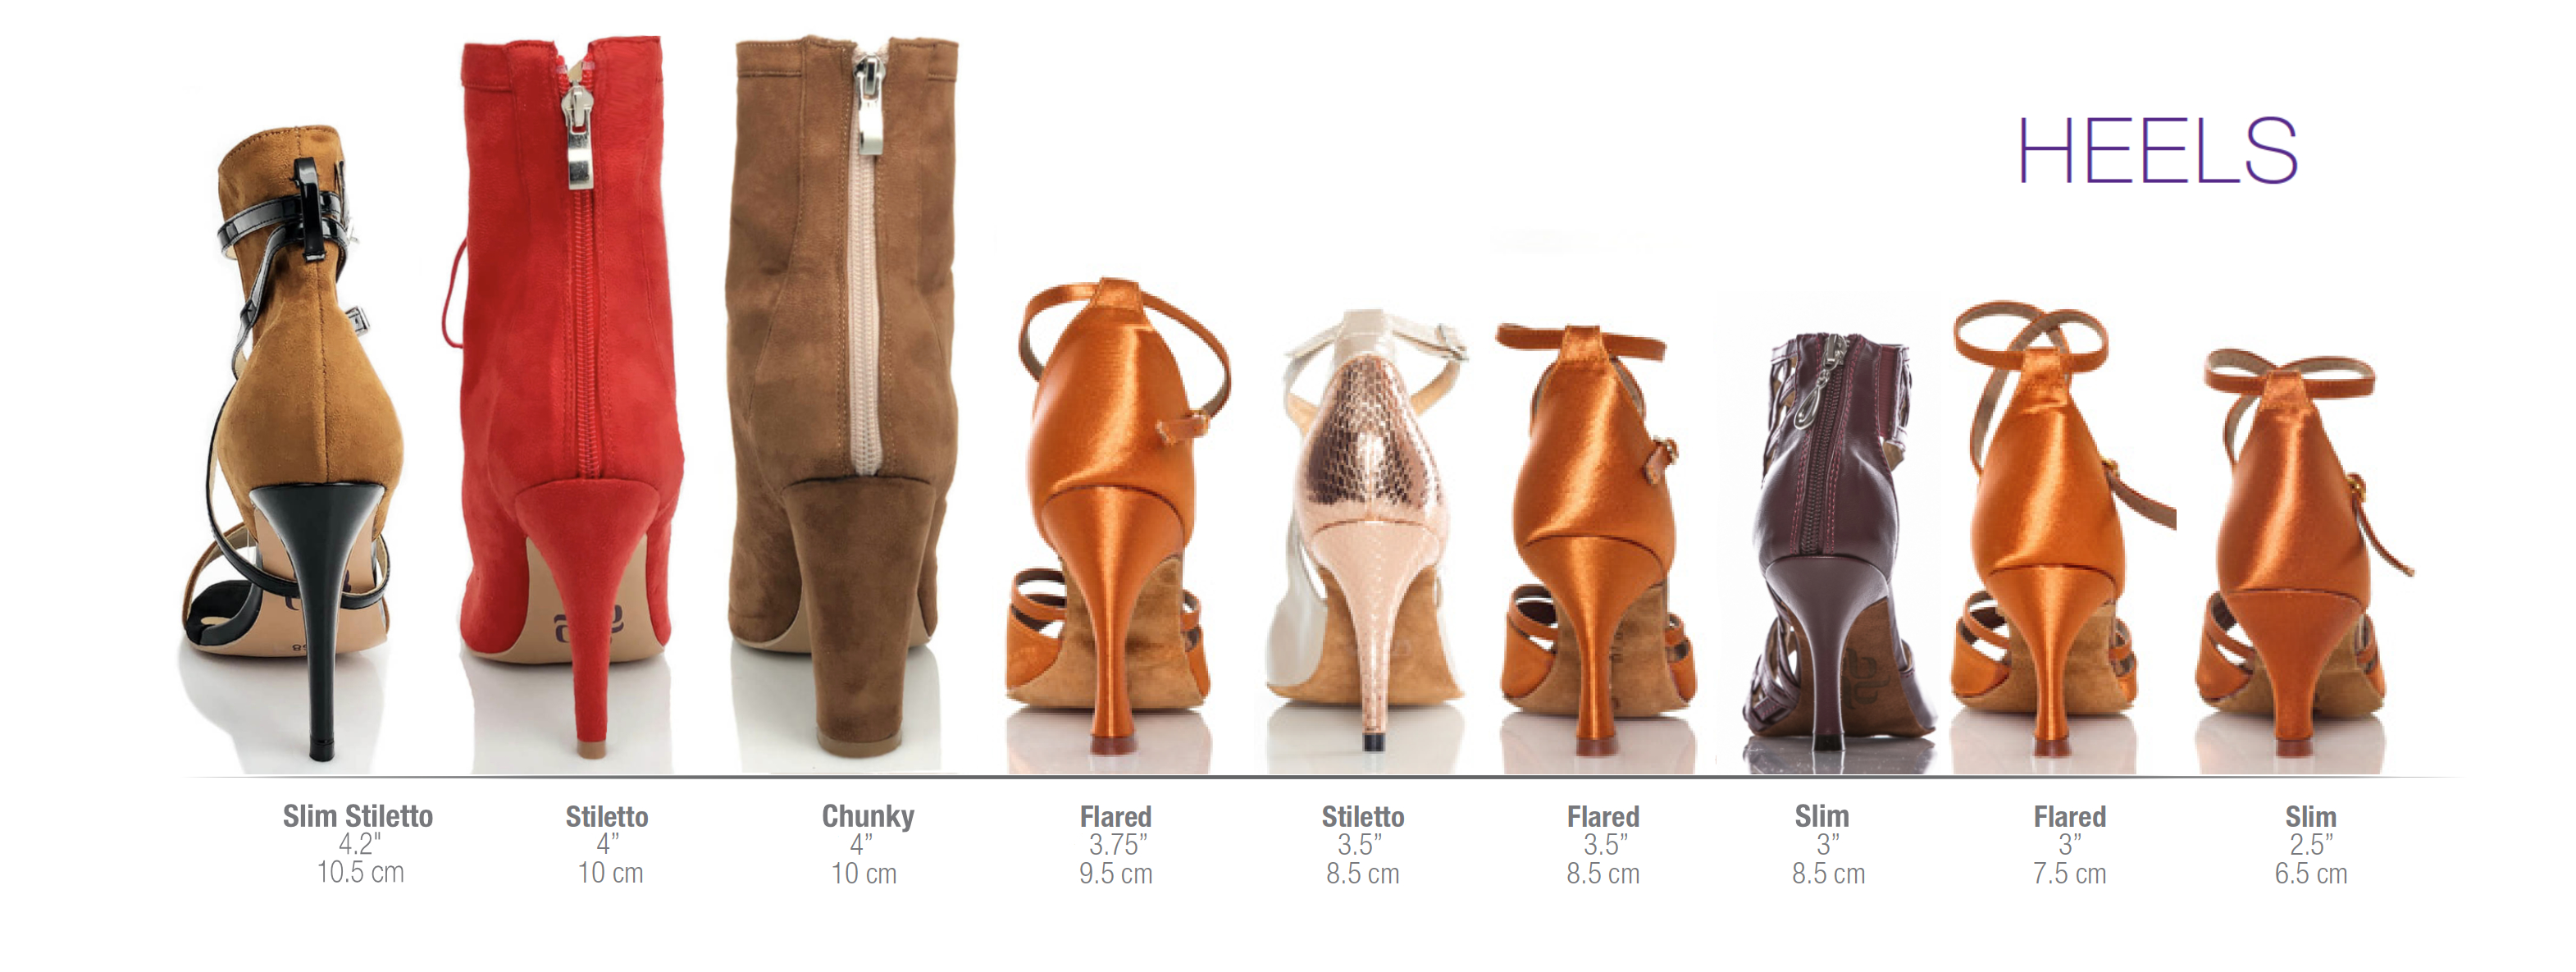 Dance Shoe Or Fashion Shoe. Why Are Burju Shoes So Comfortable? Burju